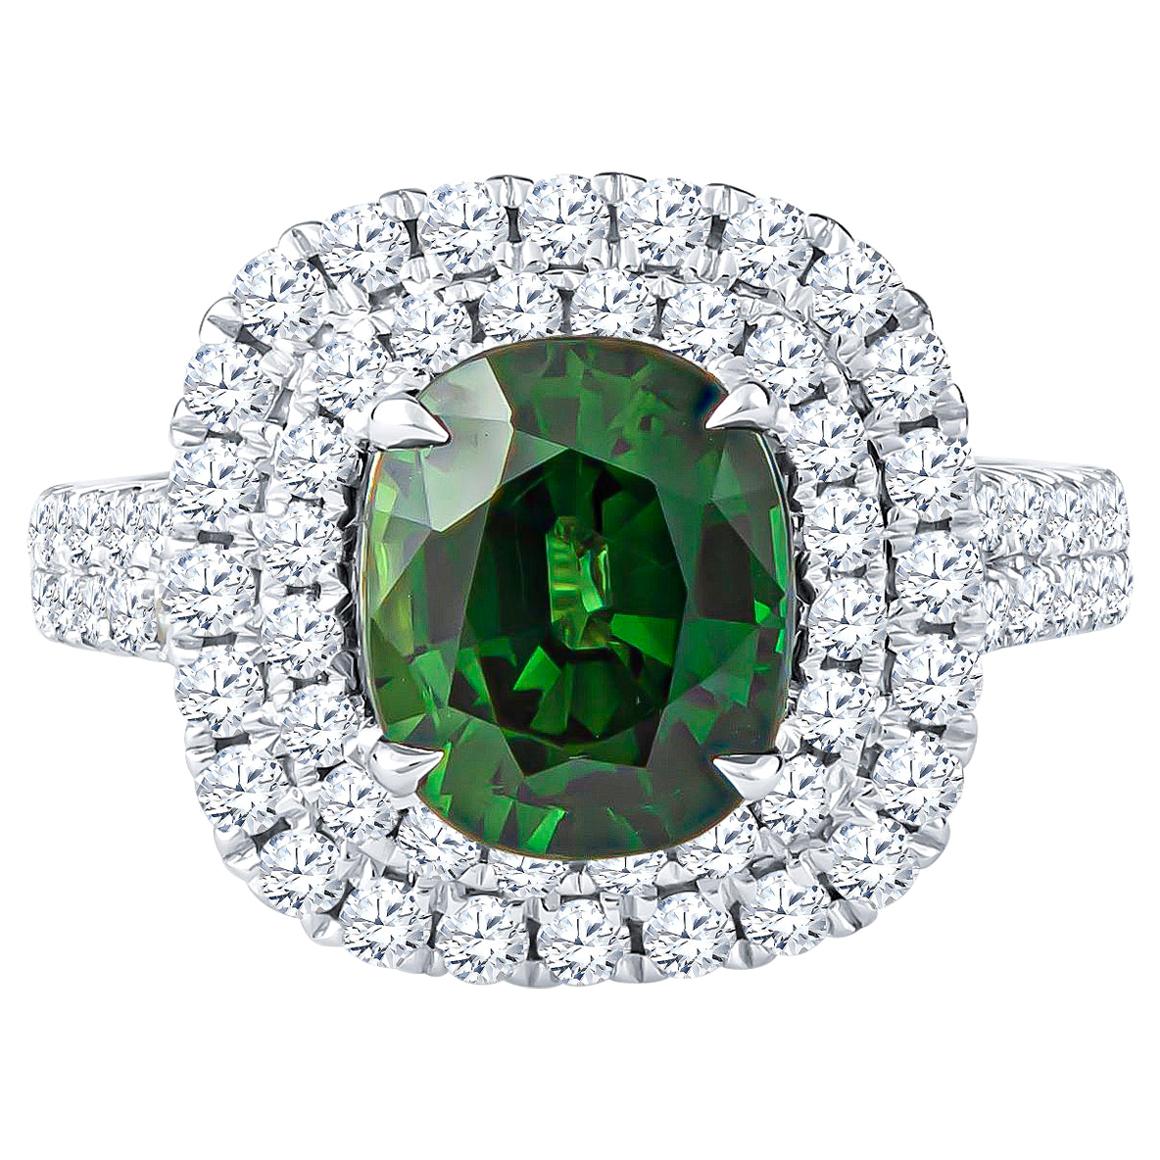 3.12 Carat Green Cushion Cut Sapphire 'GIA Lab Report' in an 18K Diamond Ring